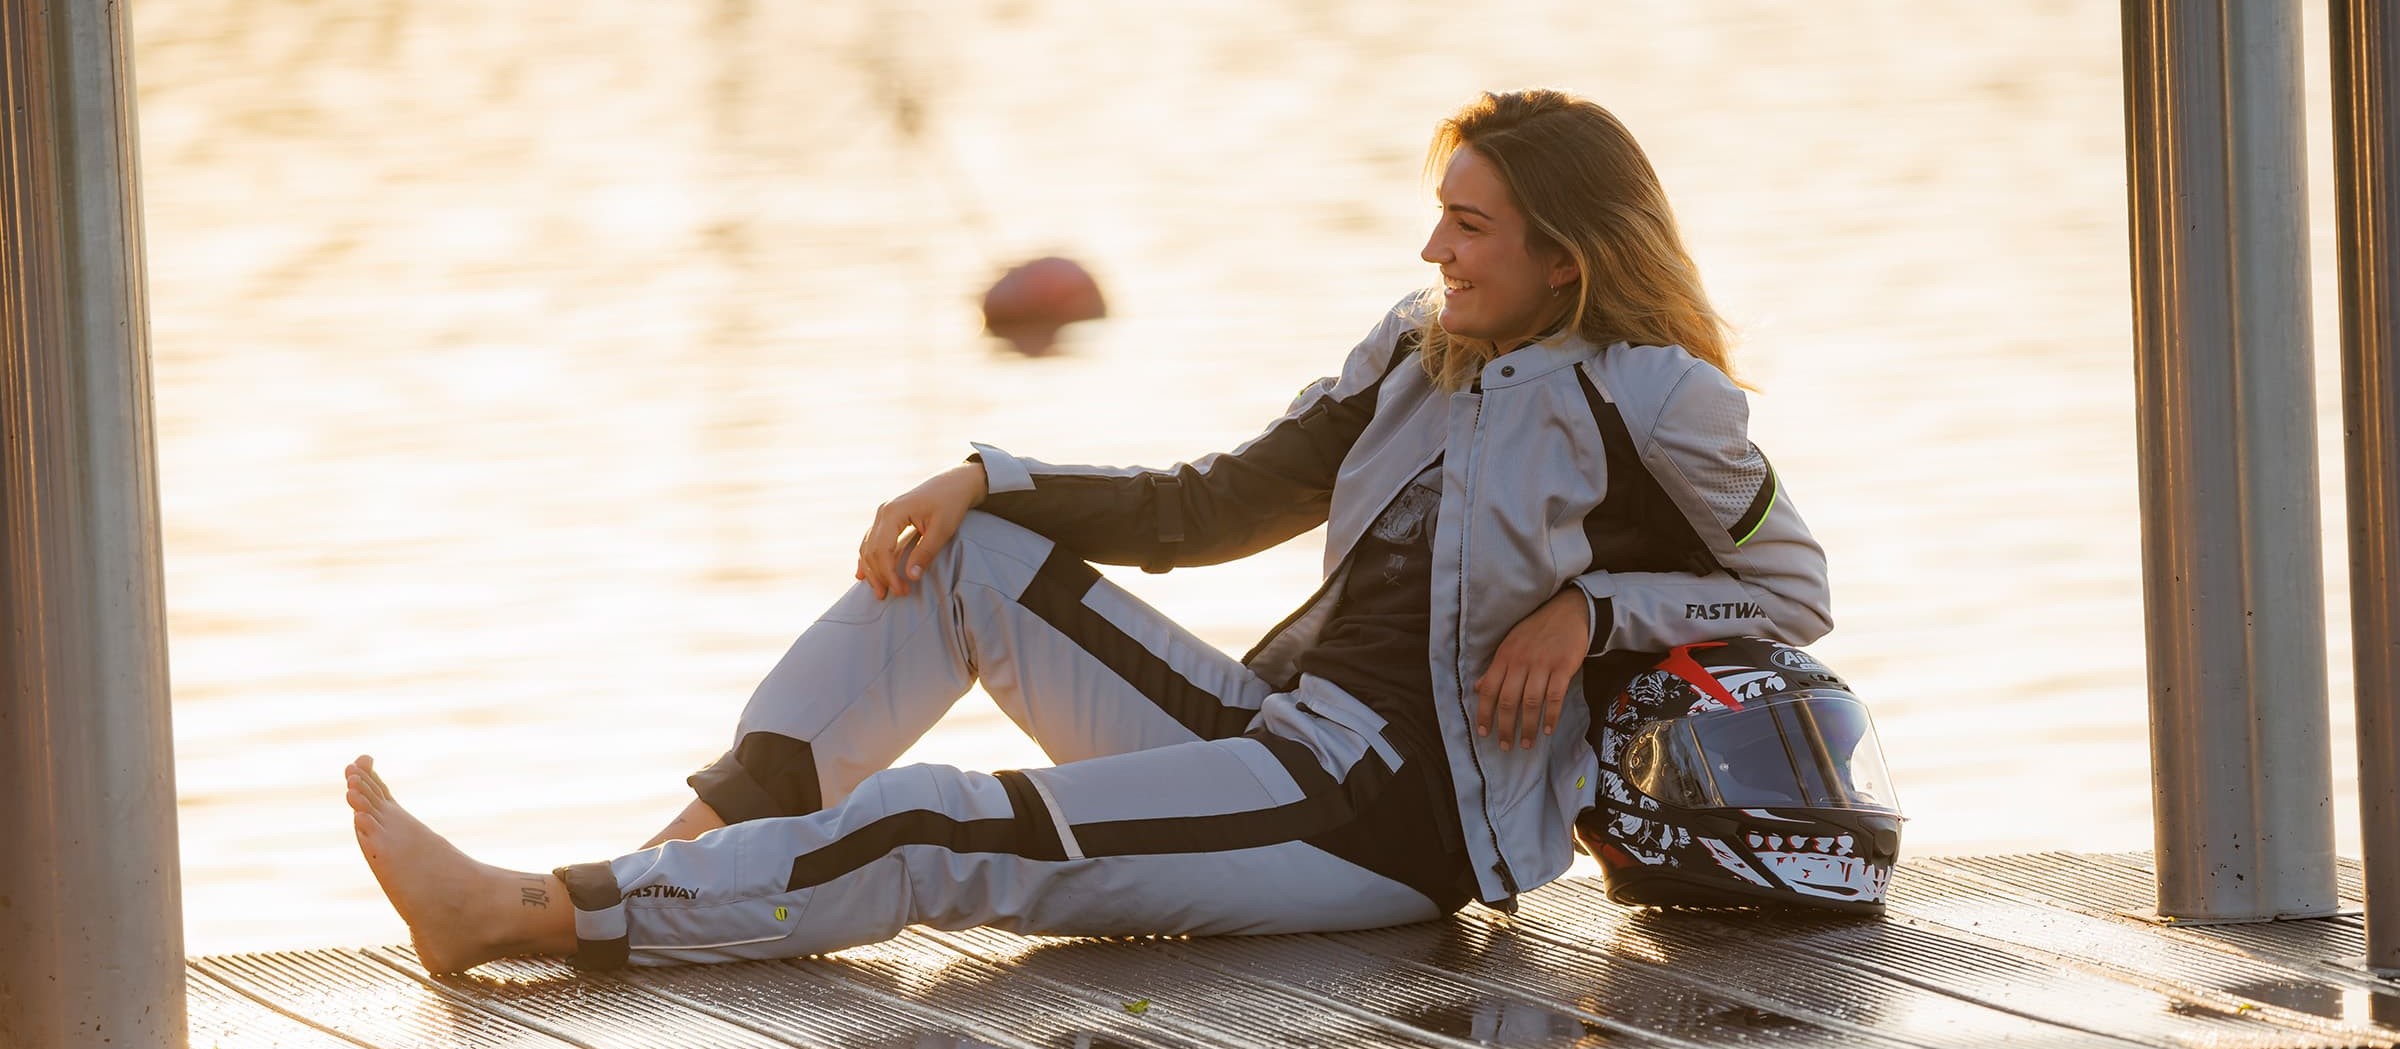 FIGO Ladies Leather Motorcycle Motorbike Trousers Size UK 12 = 30 waist  (LBG)